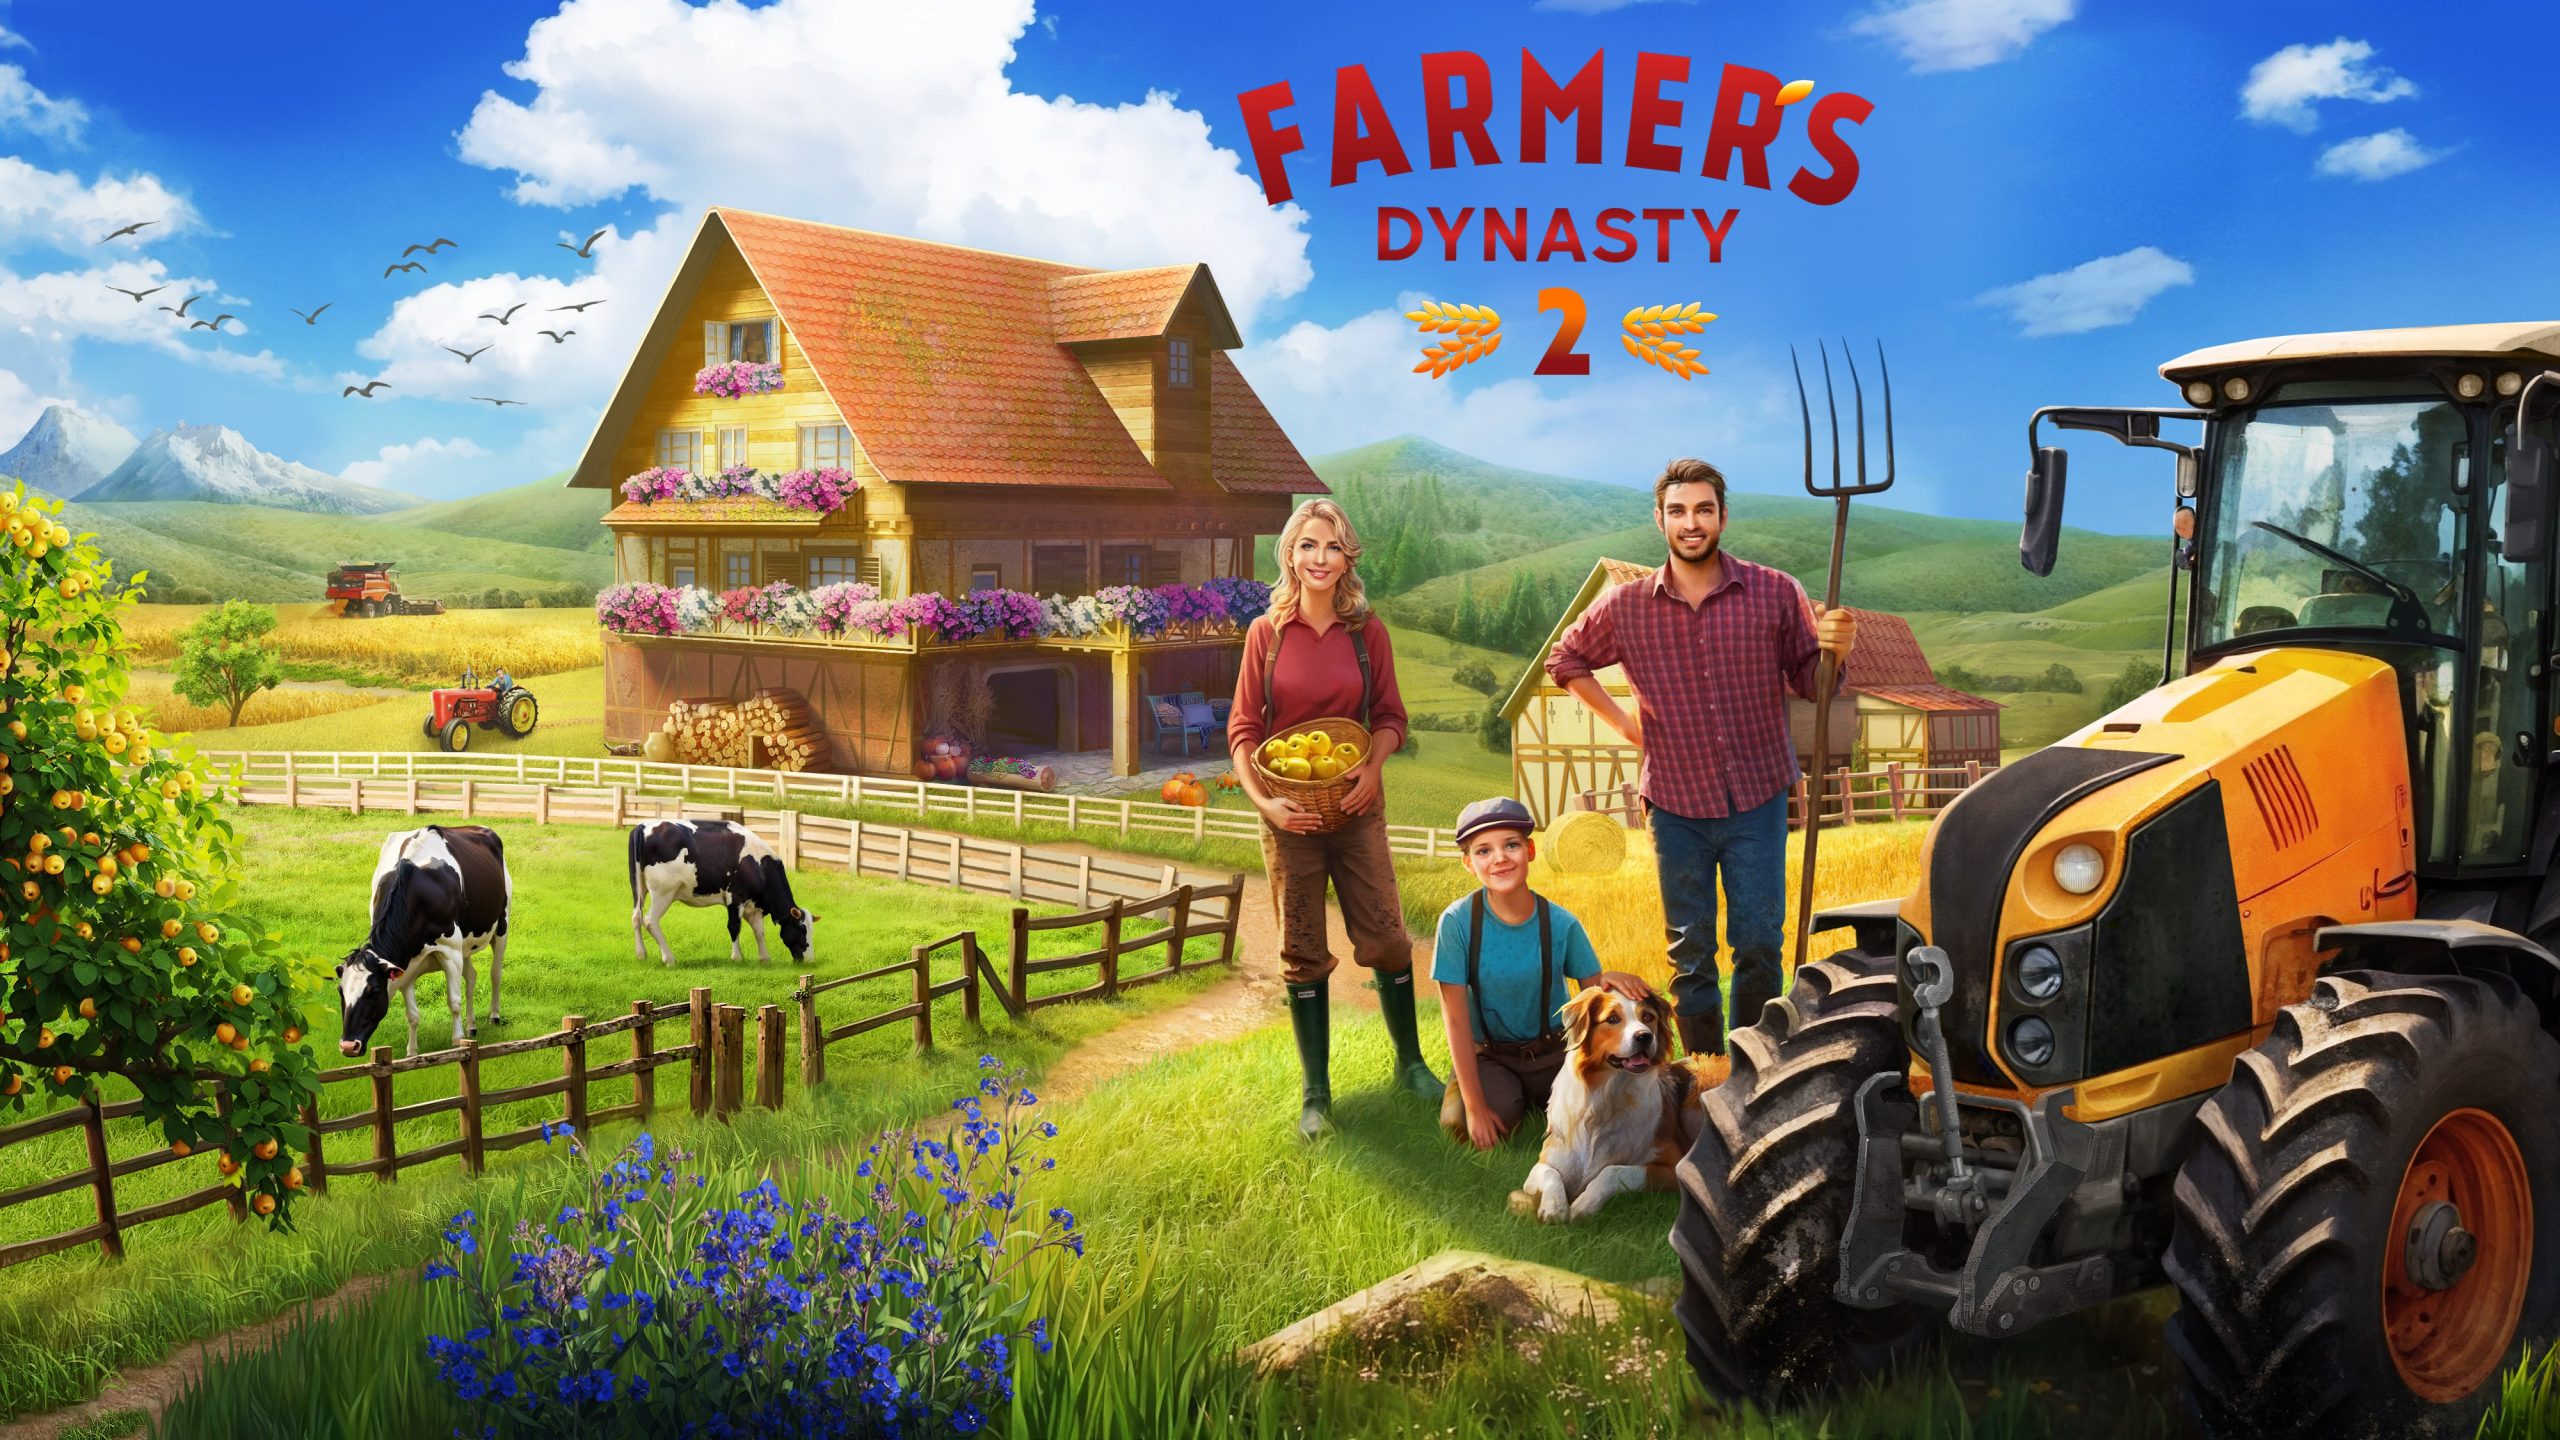 Ranch Sim Life Farm & Animals - Apps on Google Play